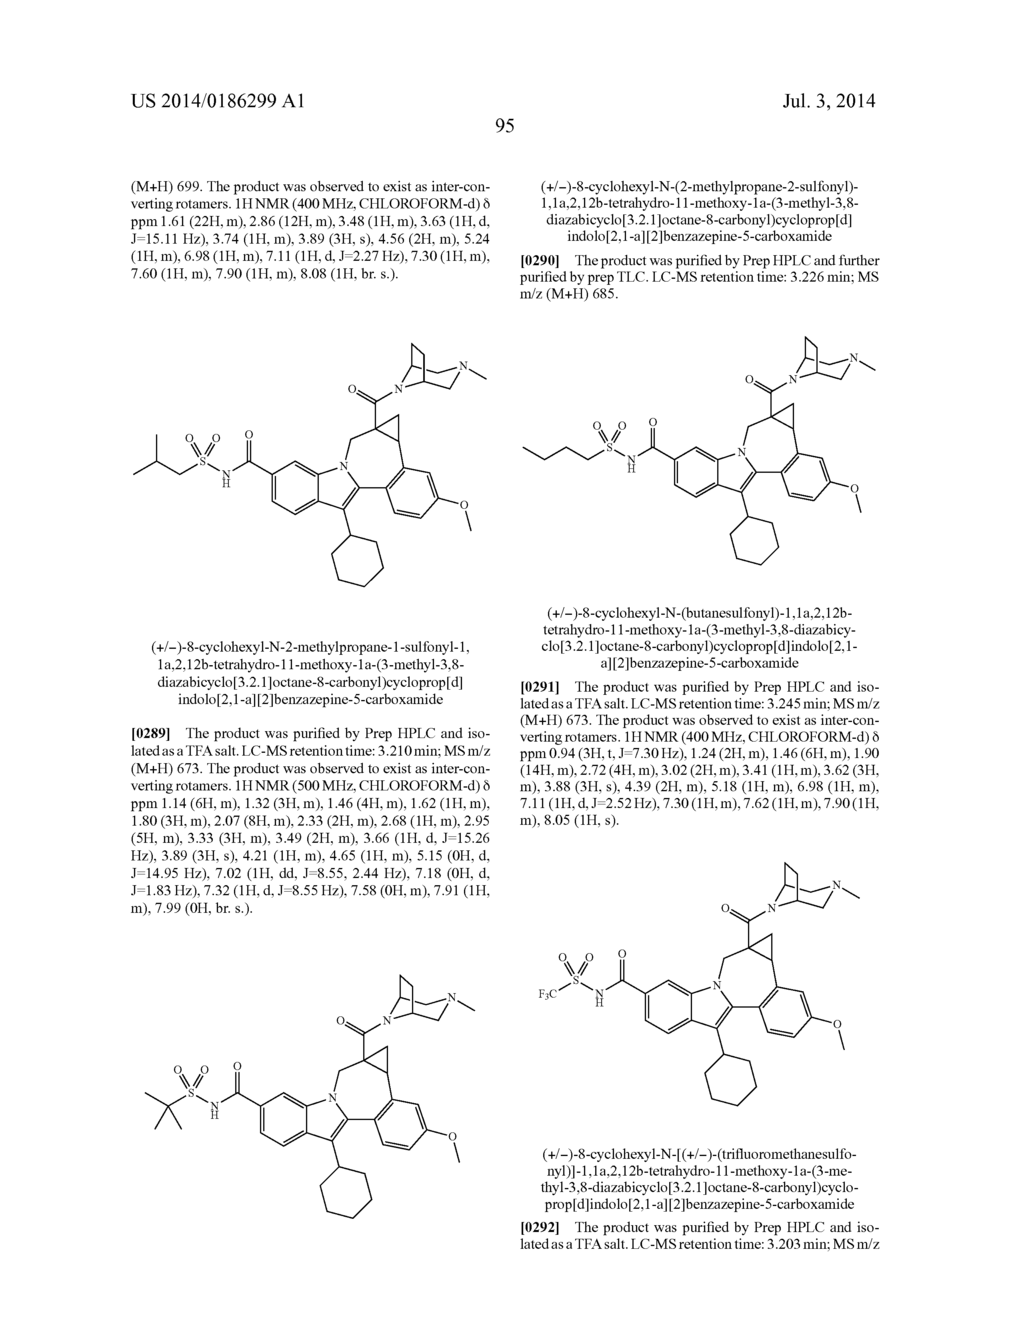 Cyclopropyl Fused Indolobenzazepine HCV NS5B Inhibitors - diagram, schematic, and image 96